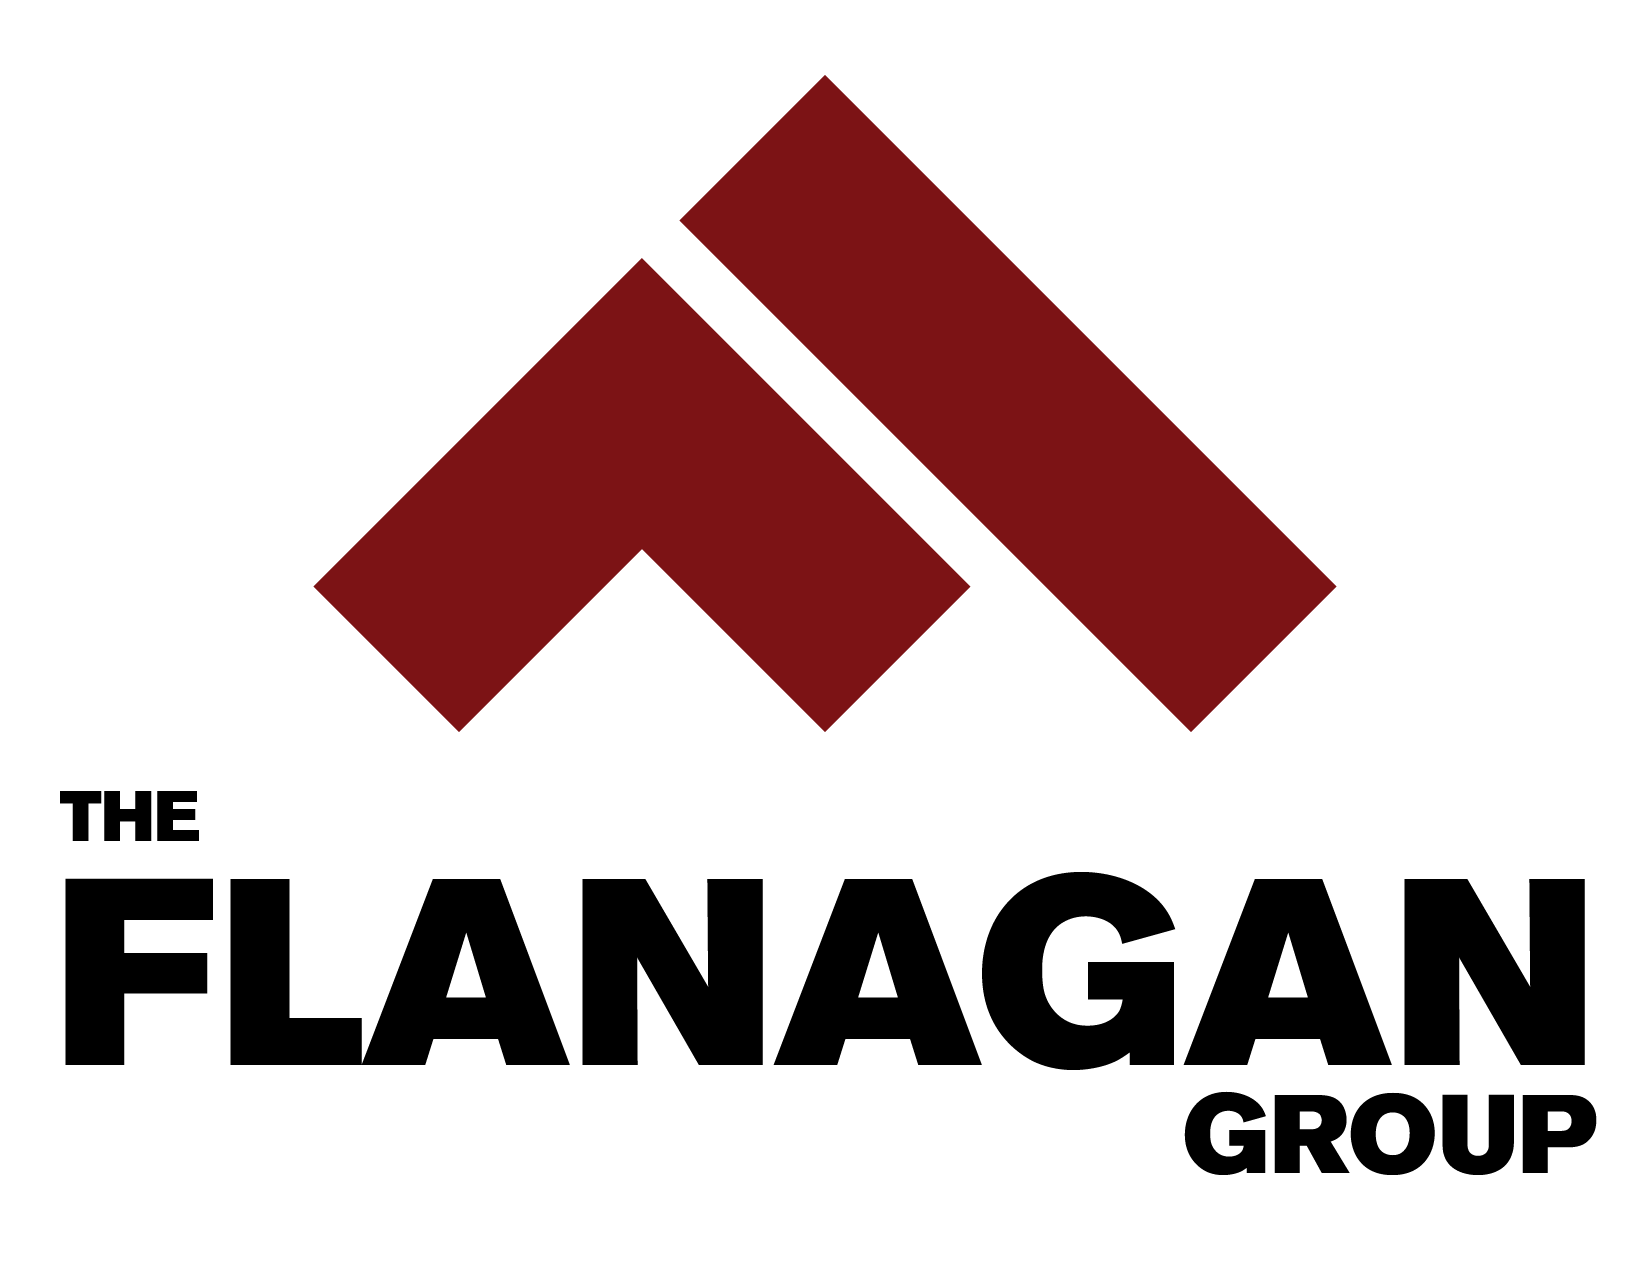 Flanagan Logo - The Flanagan Group. About The Flanagan Group